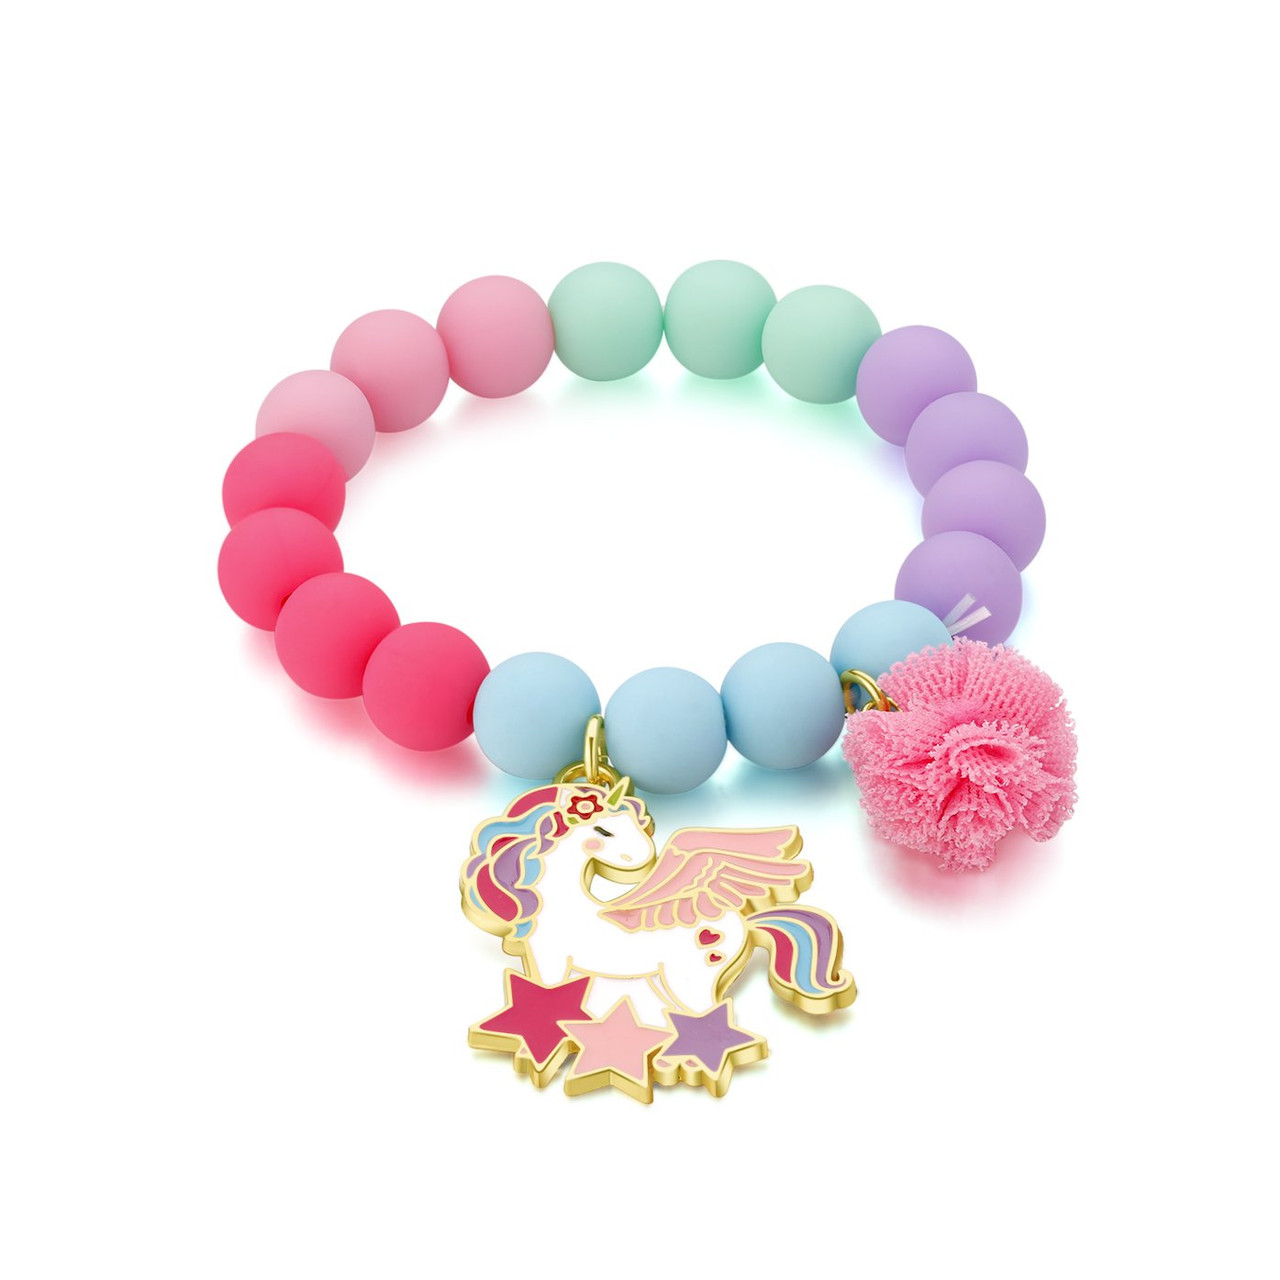 Diy Charm Bracelet Making Kit, Unicorn Bracelet Kit, Mermaid Candy Unicorn  Crafts Gifts For Girls Teens Age 8-12 Christmas Birthday Gift For Girls